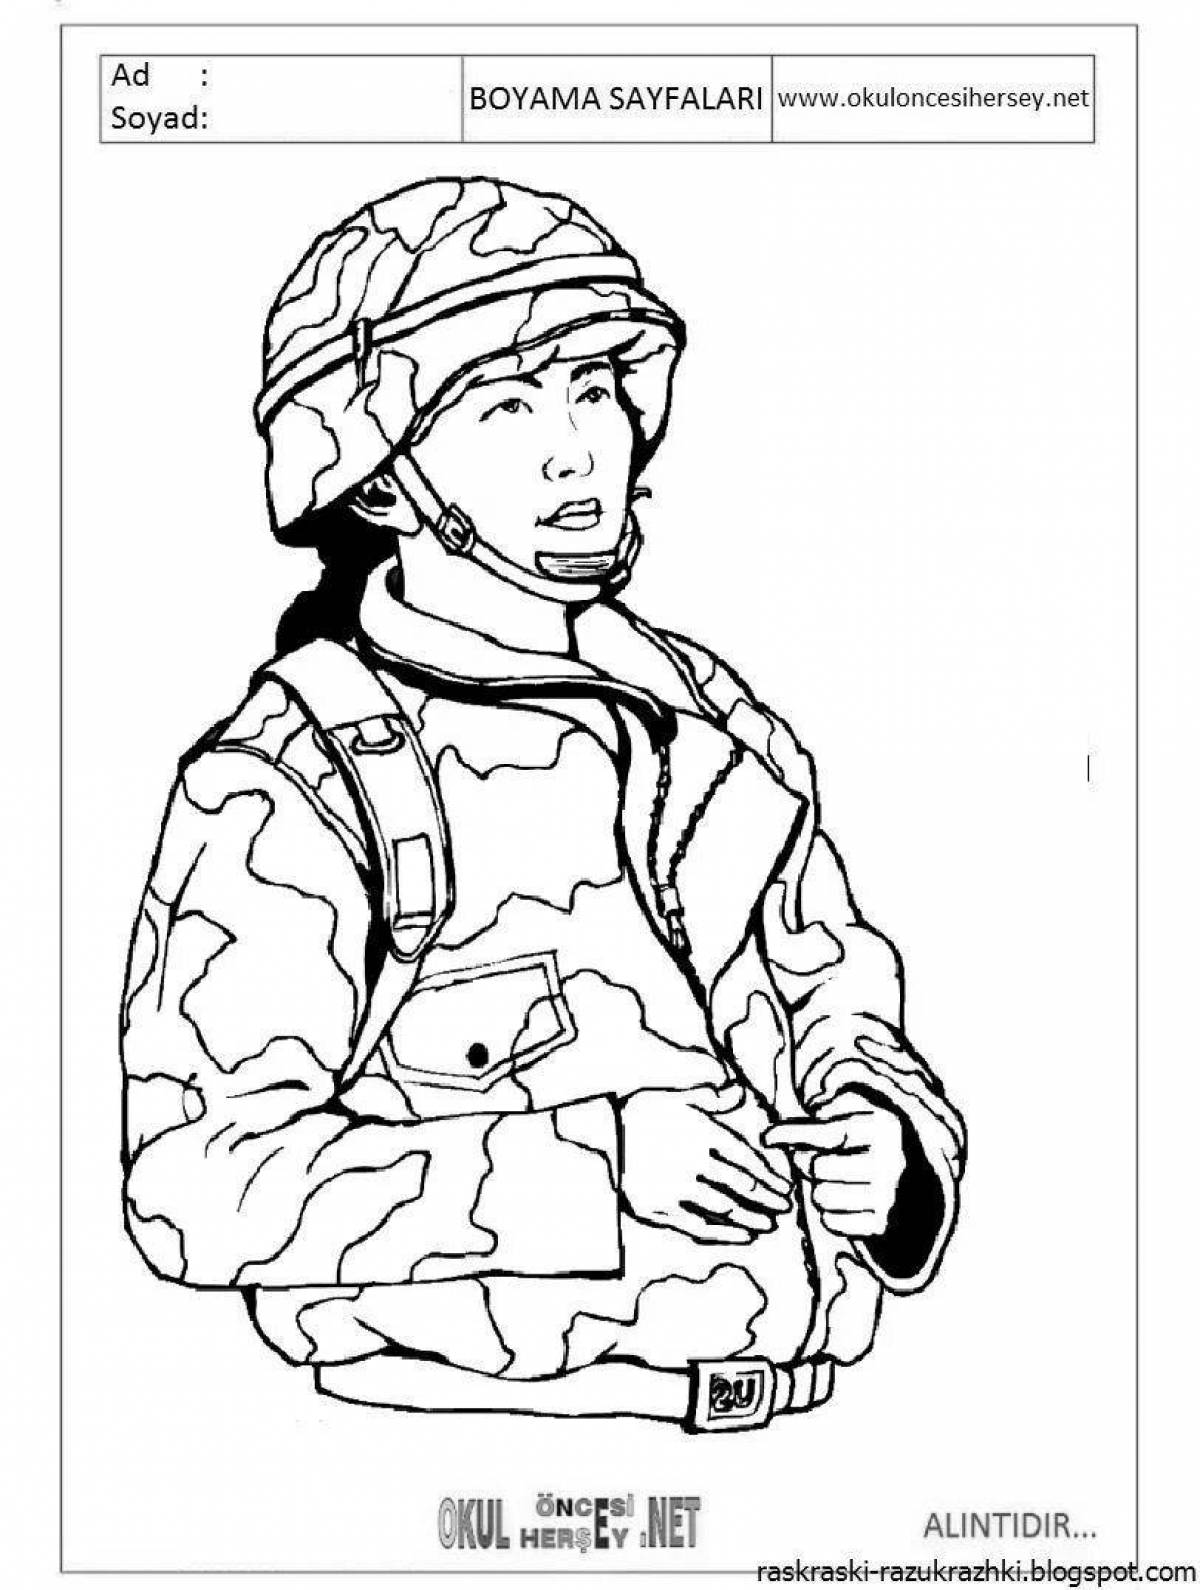 Exquisite military uniform coloring page